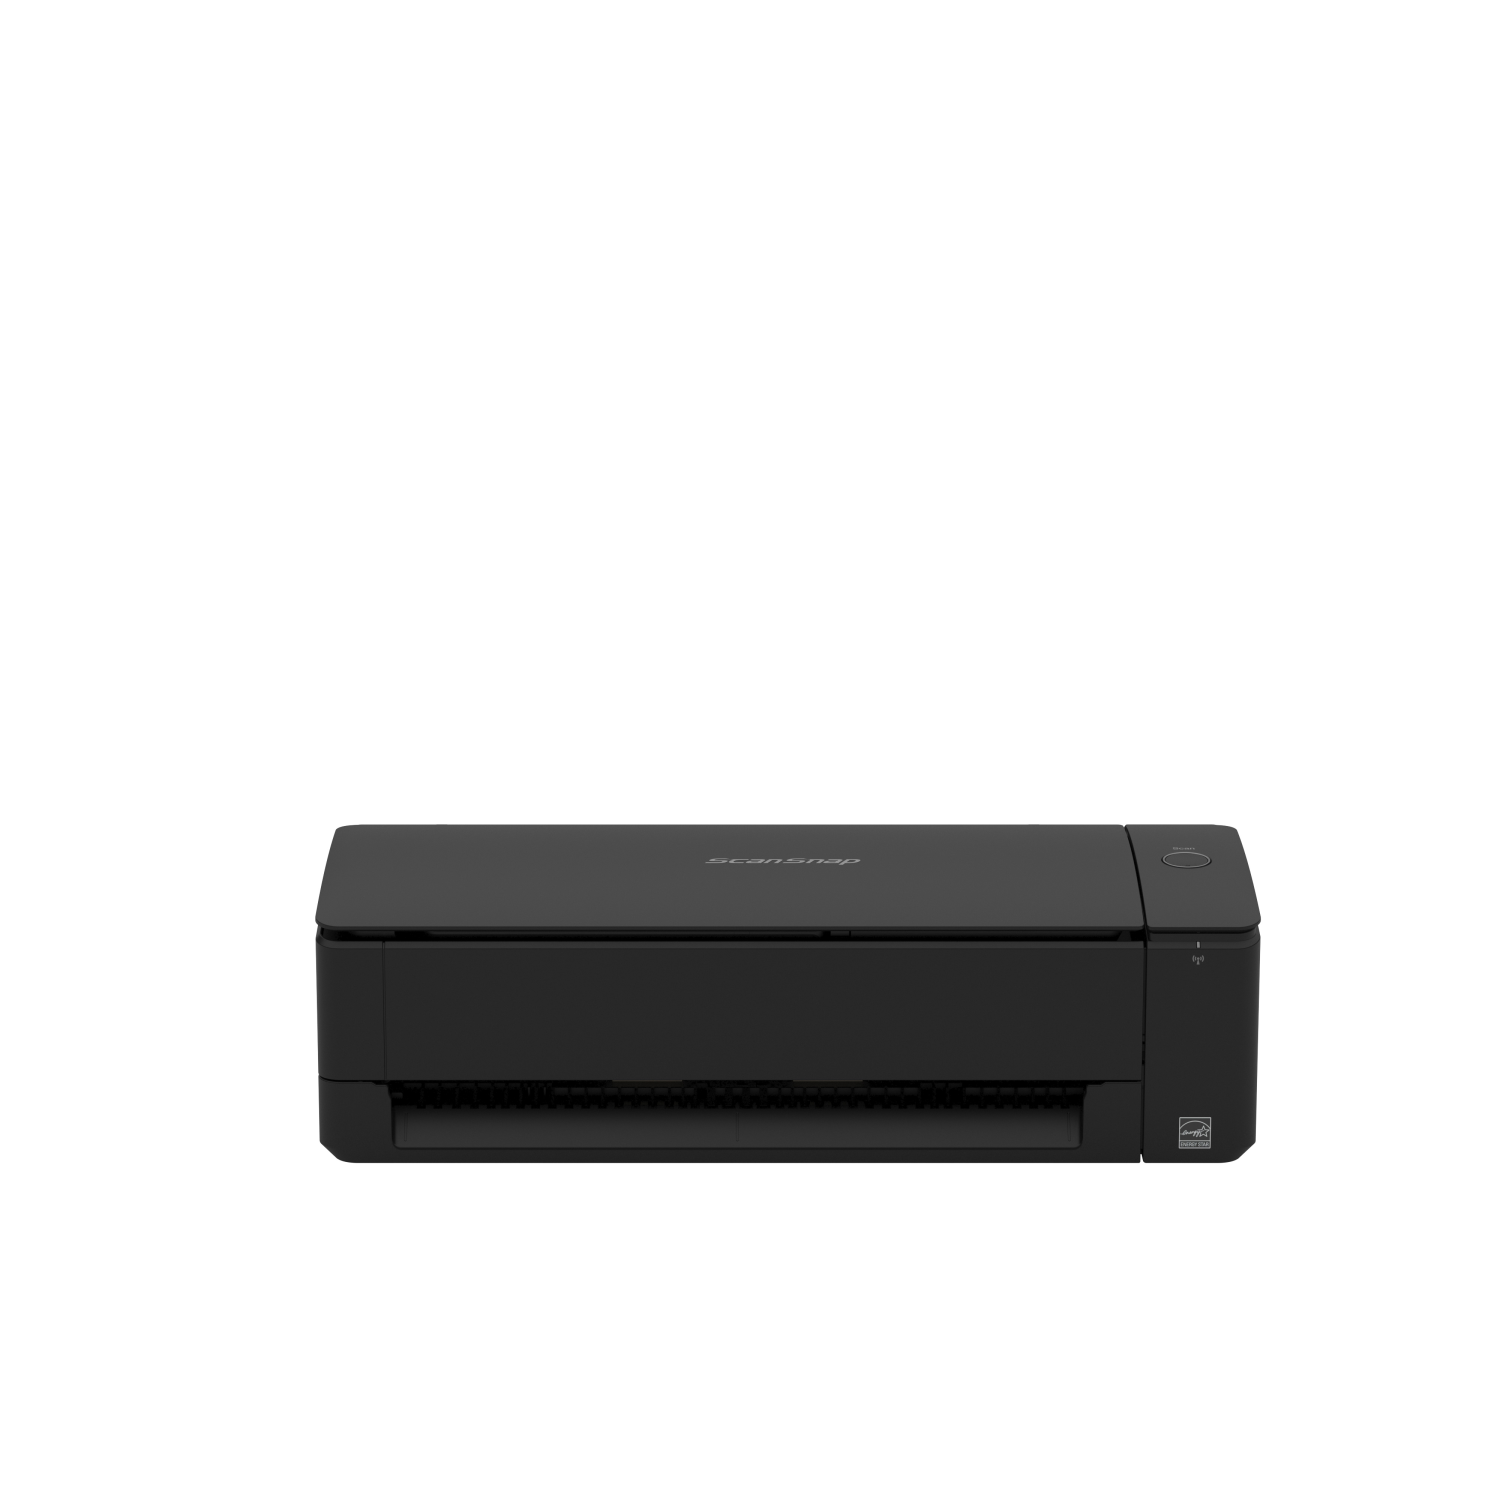 Fujitsu SCANSNAP IX1300 Black - (PA03805-B105)